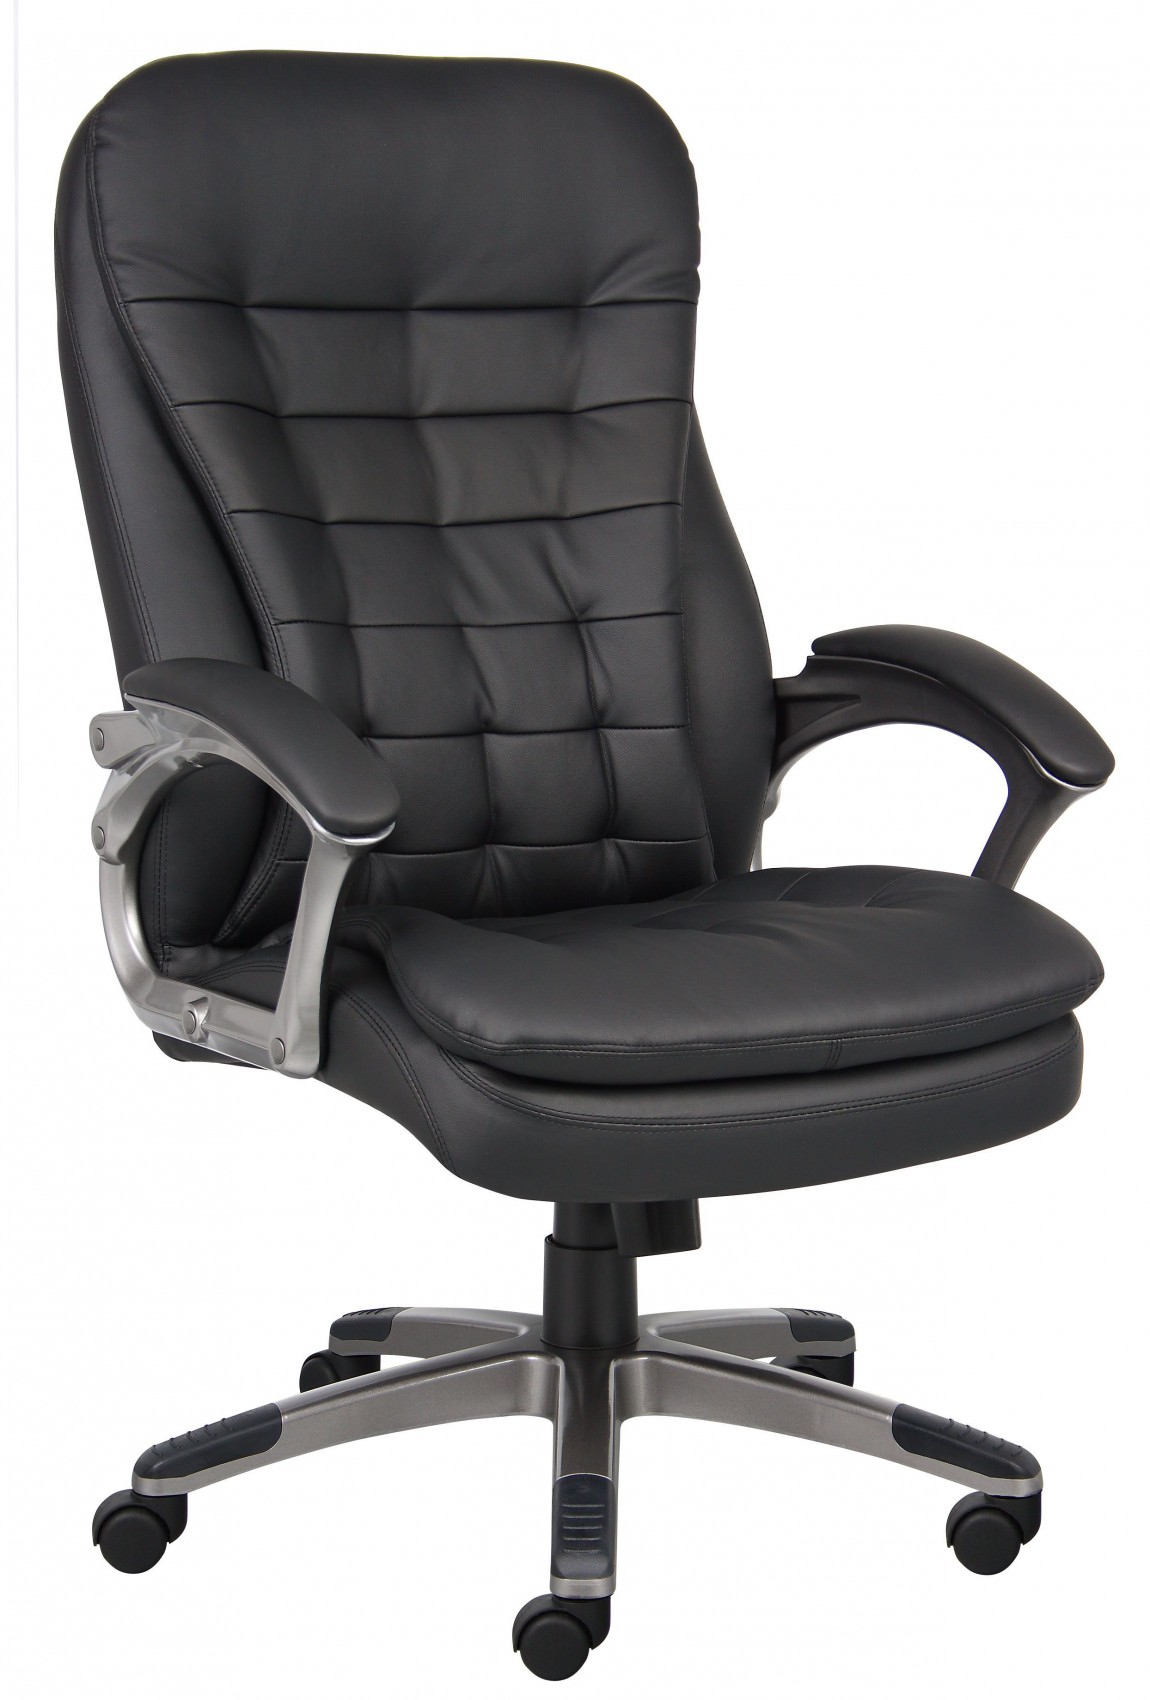 https://madisonliquidators.com/images/p/1150/19358-executive-high-back-office-chair-1.jpg